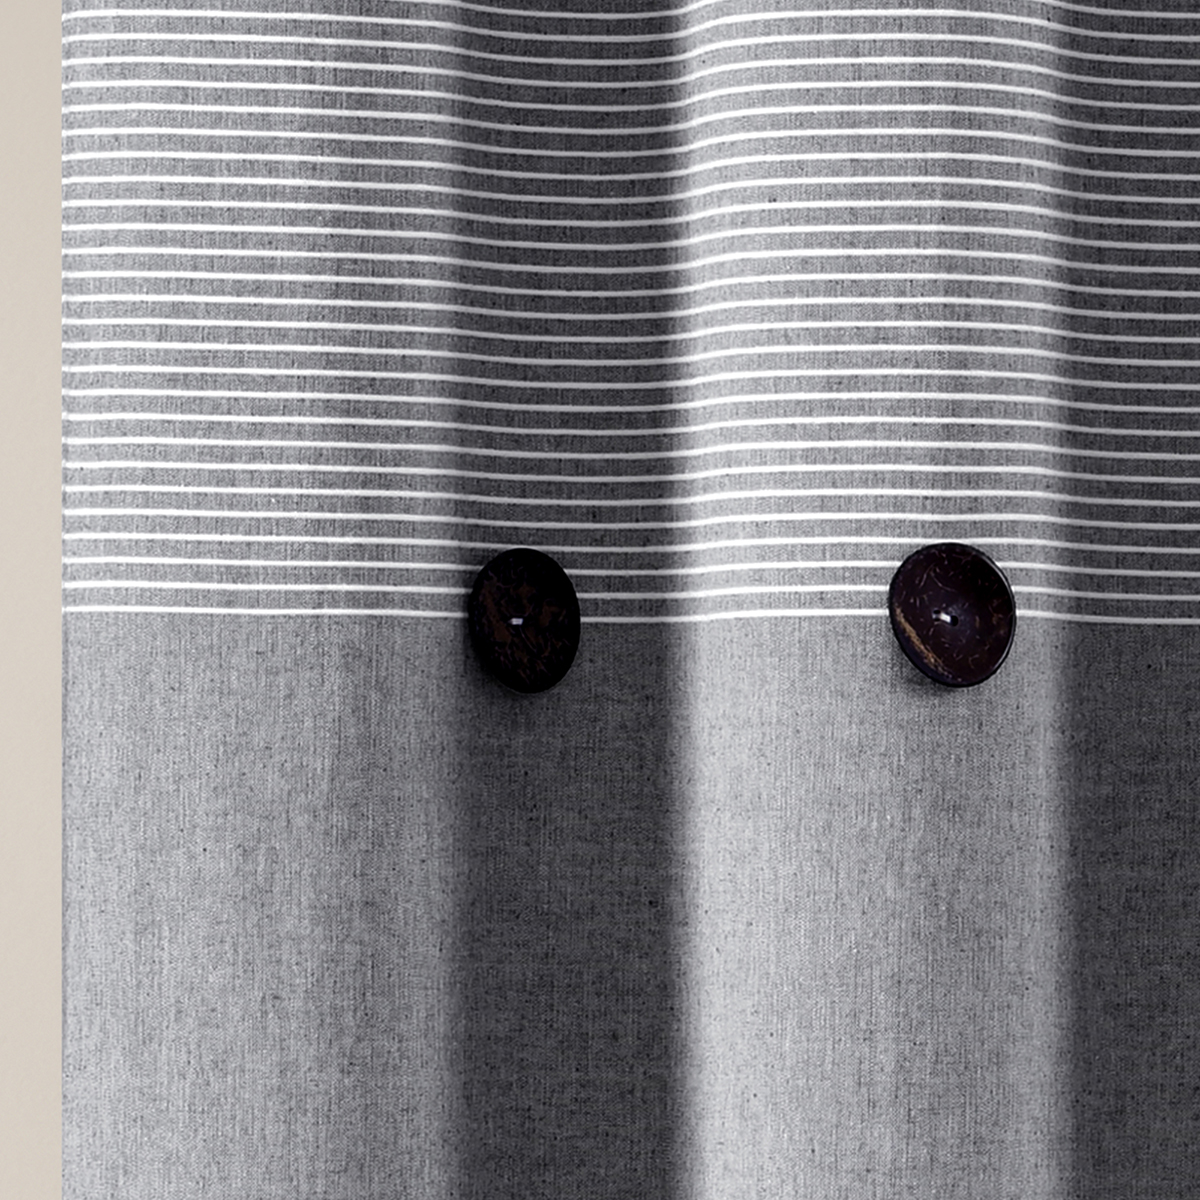 Lush Decor(R) Farmhouse Button Stripe Cotton Shower Curtain